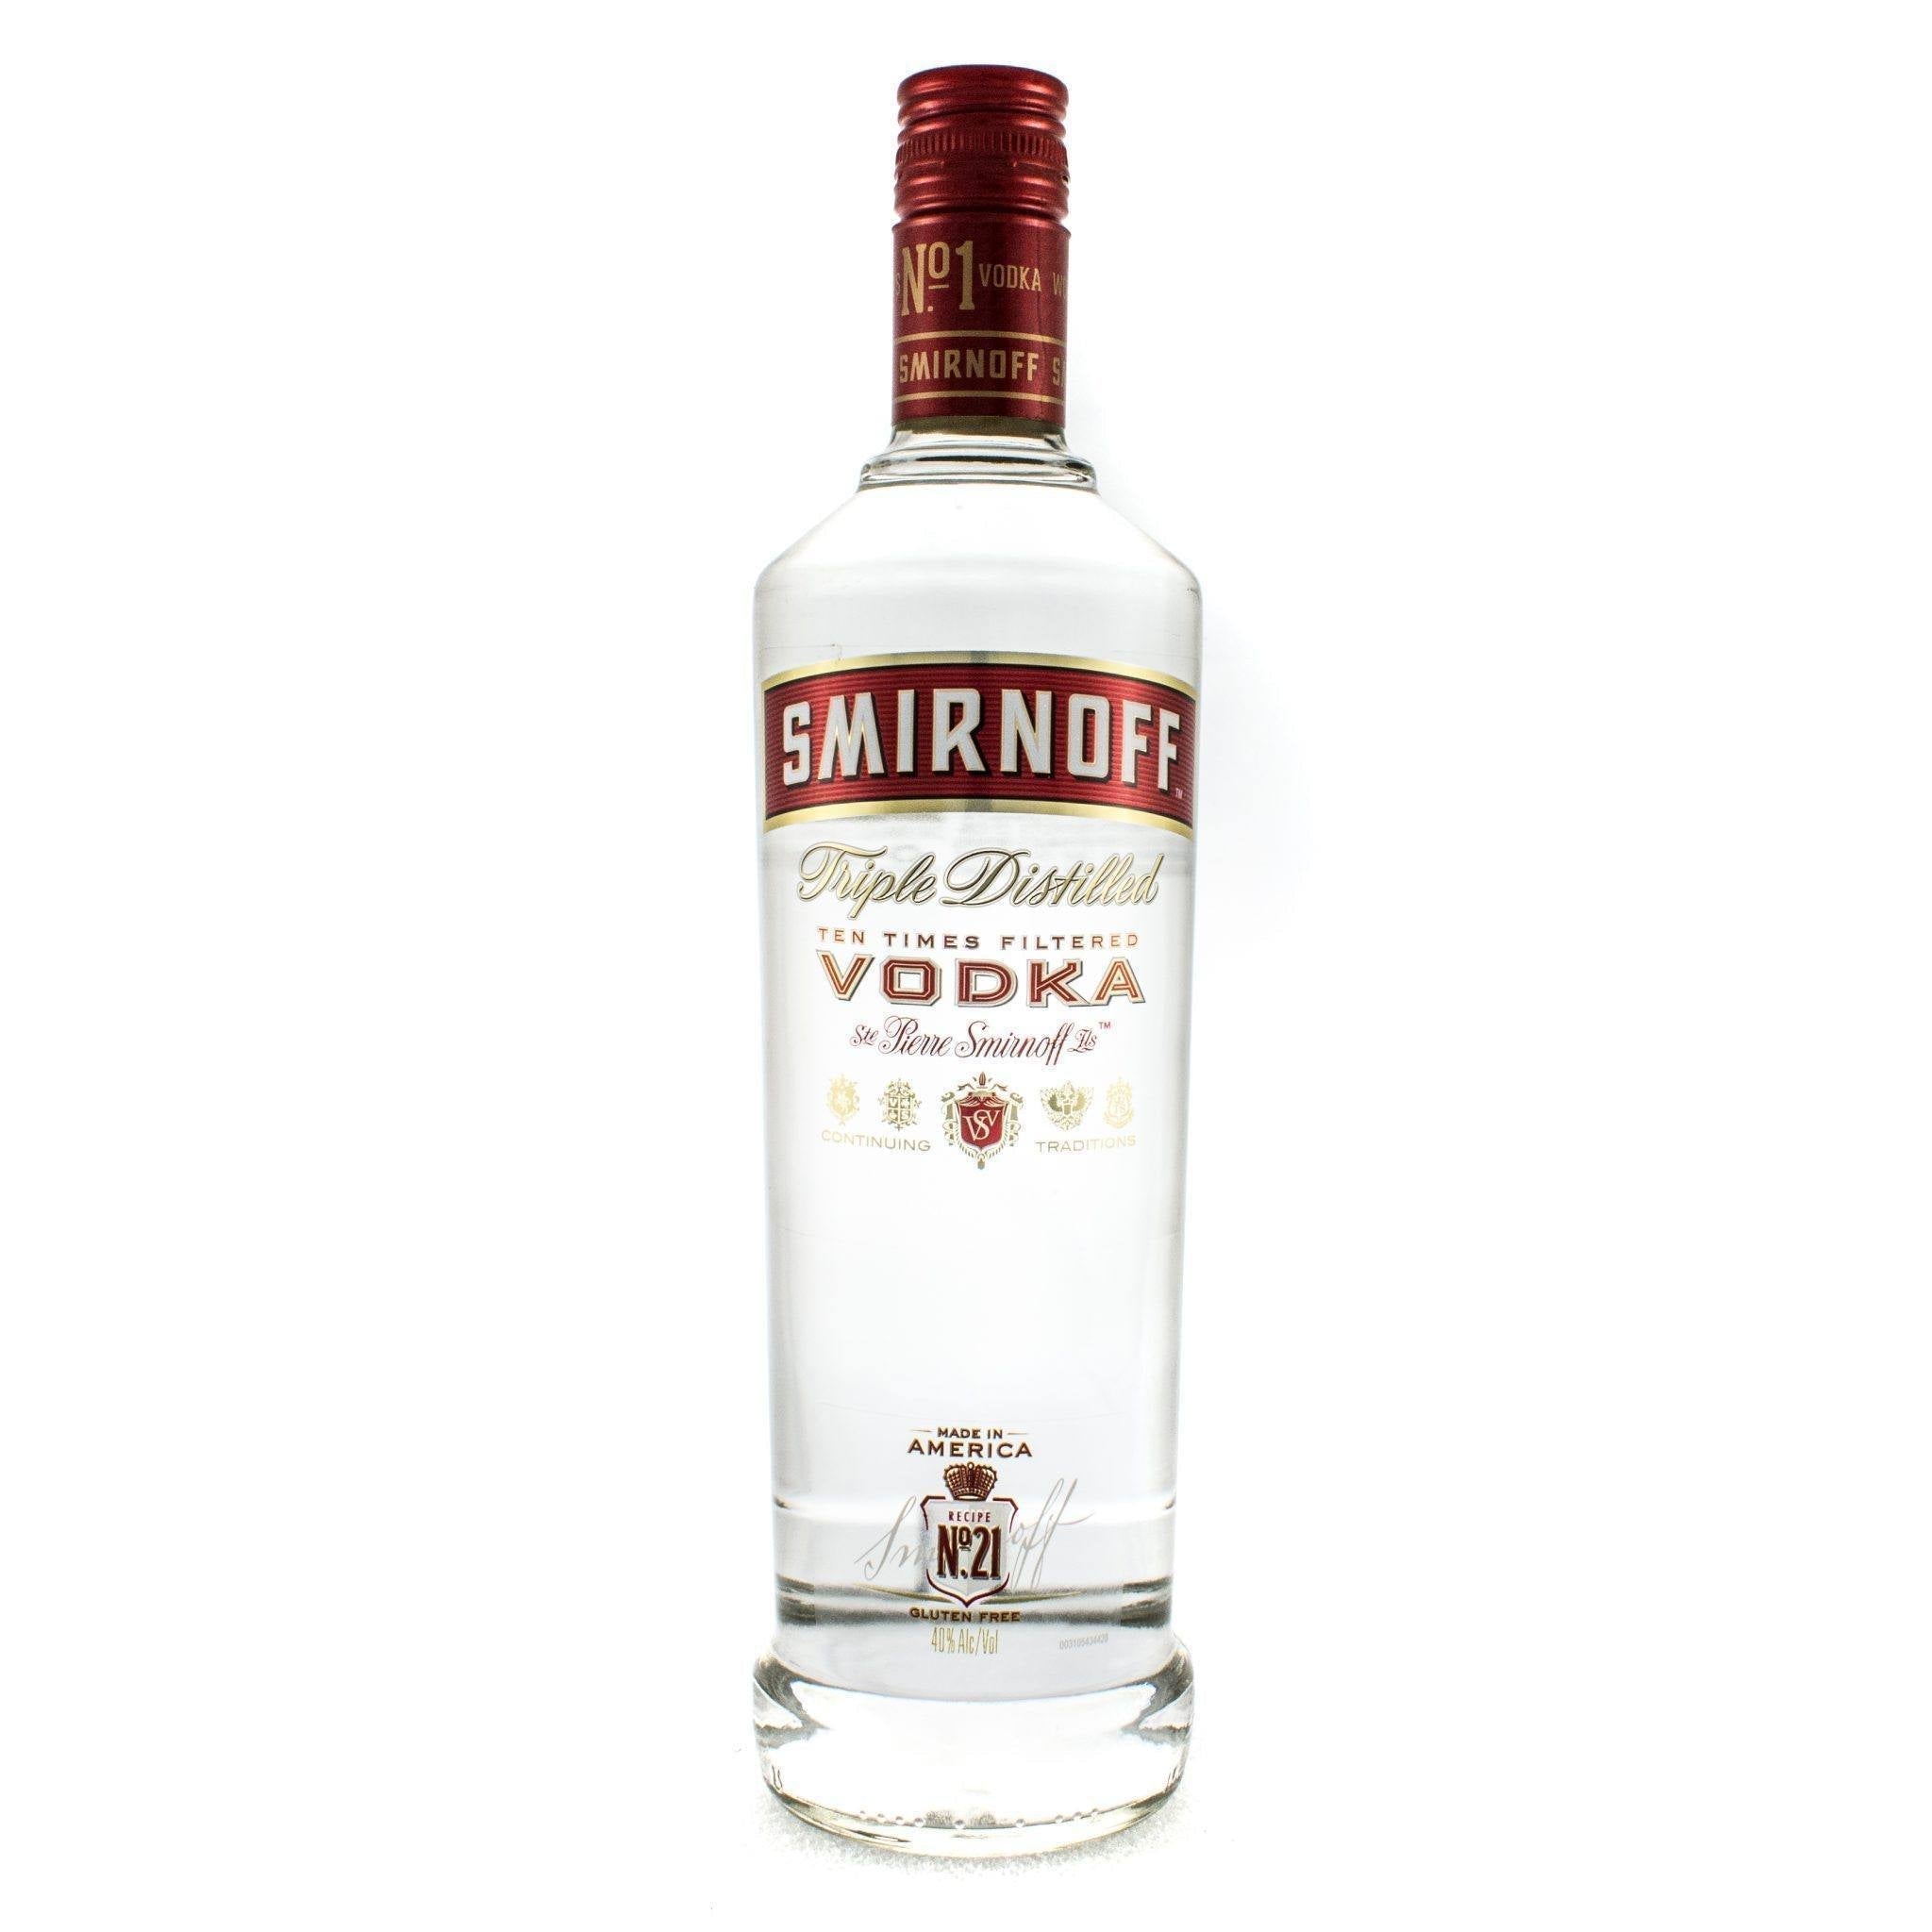 Smirnoff No. 21 Vodka Vodka Smirnoff   